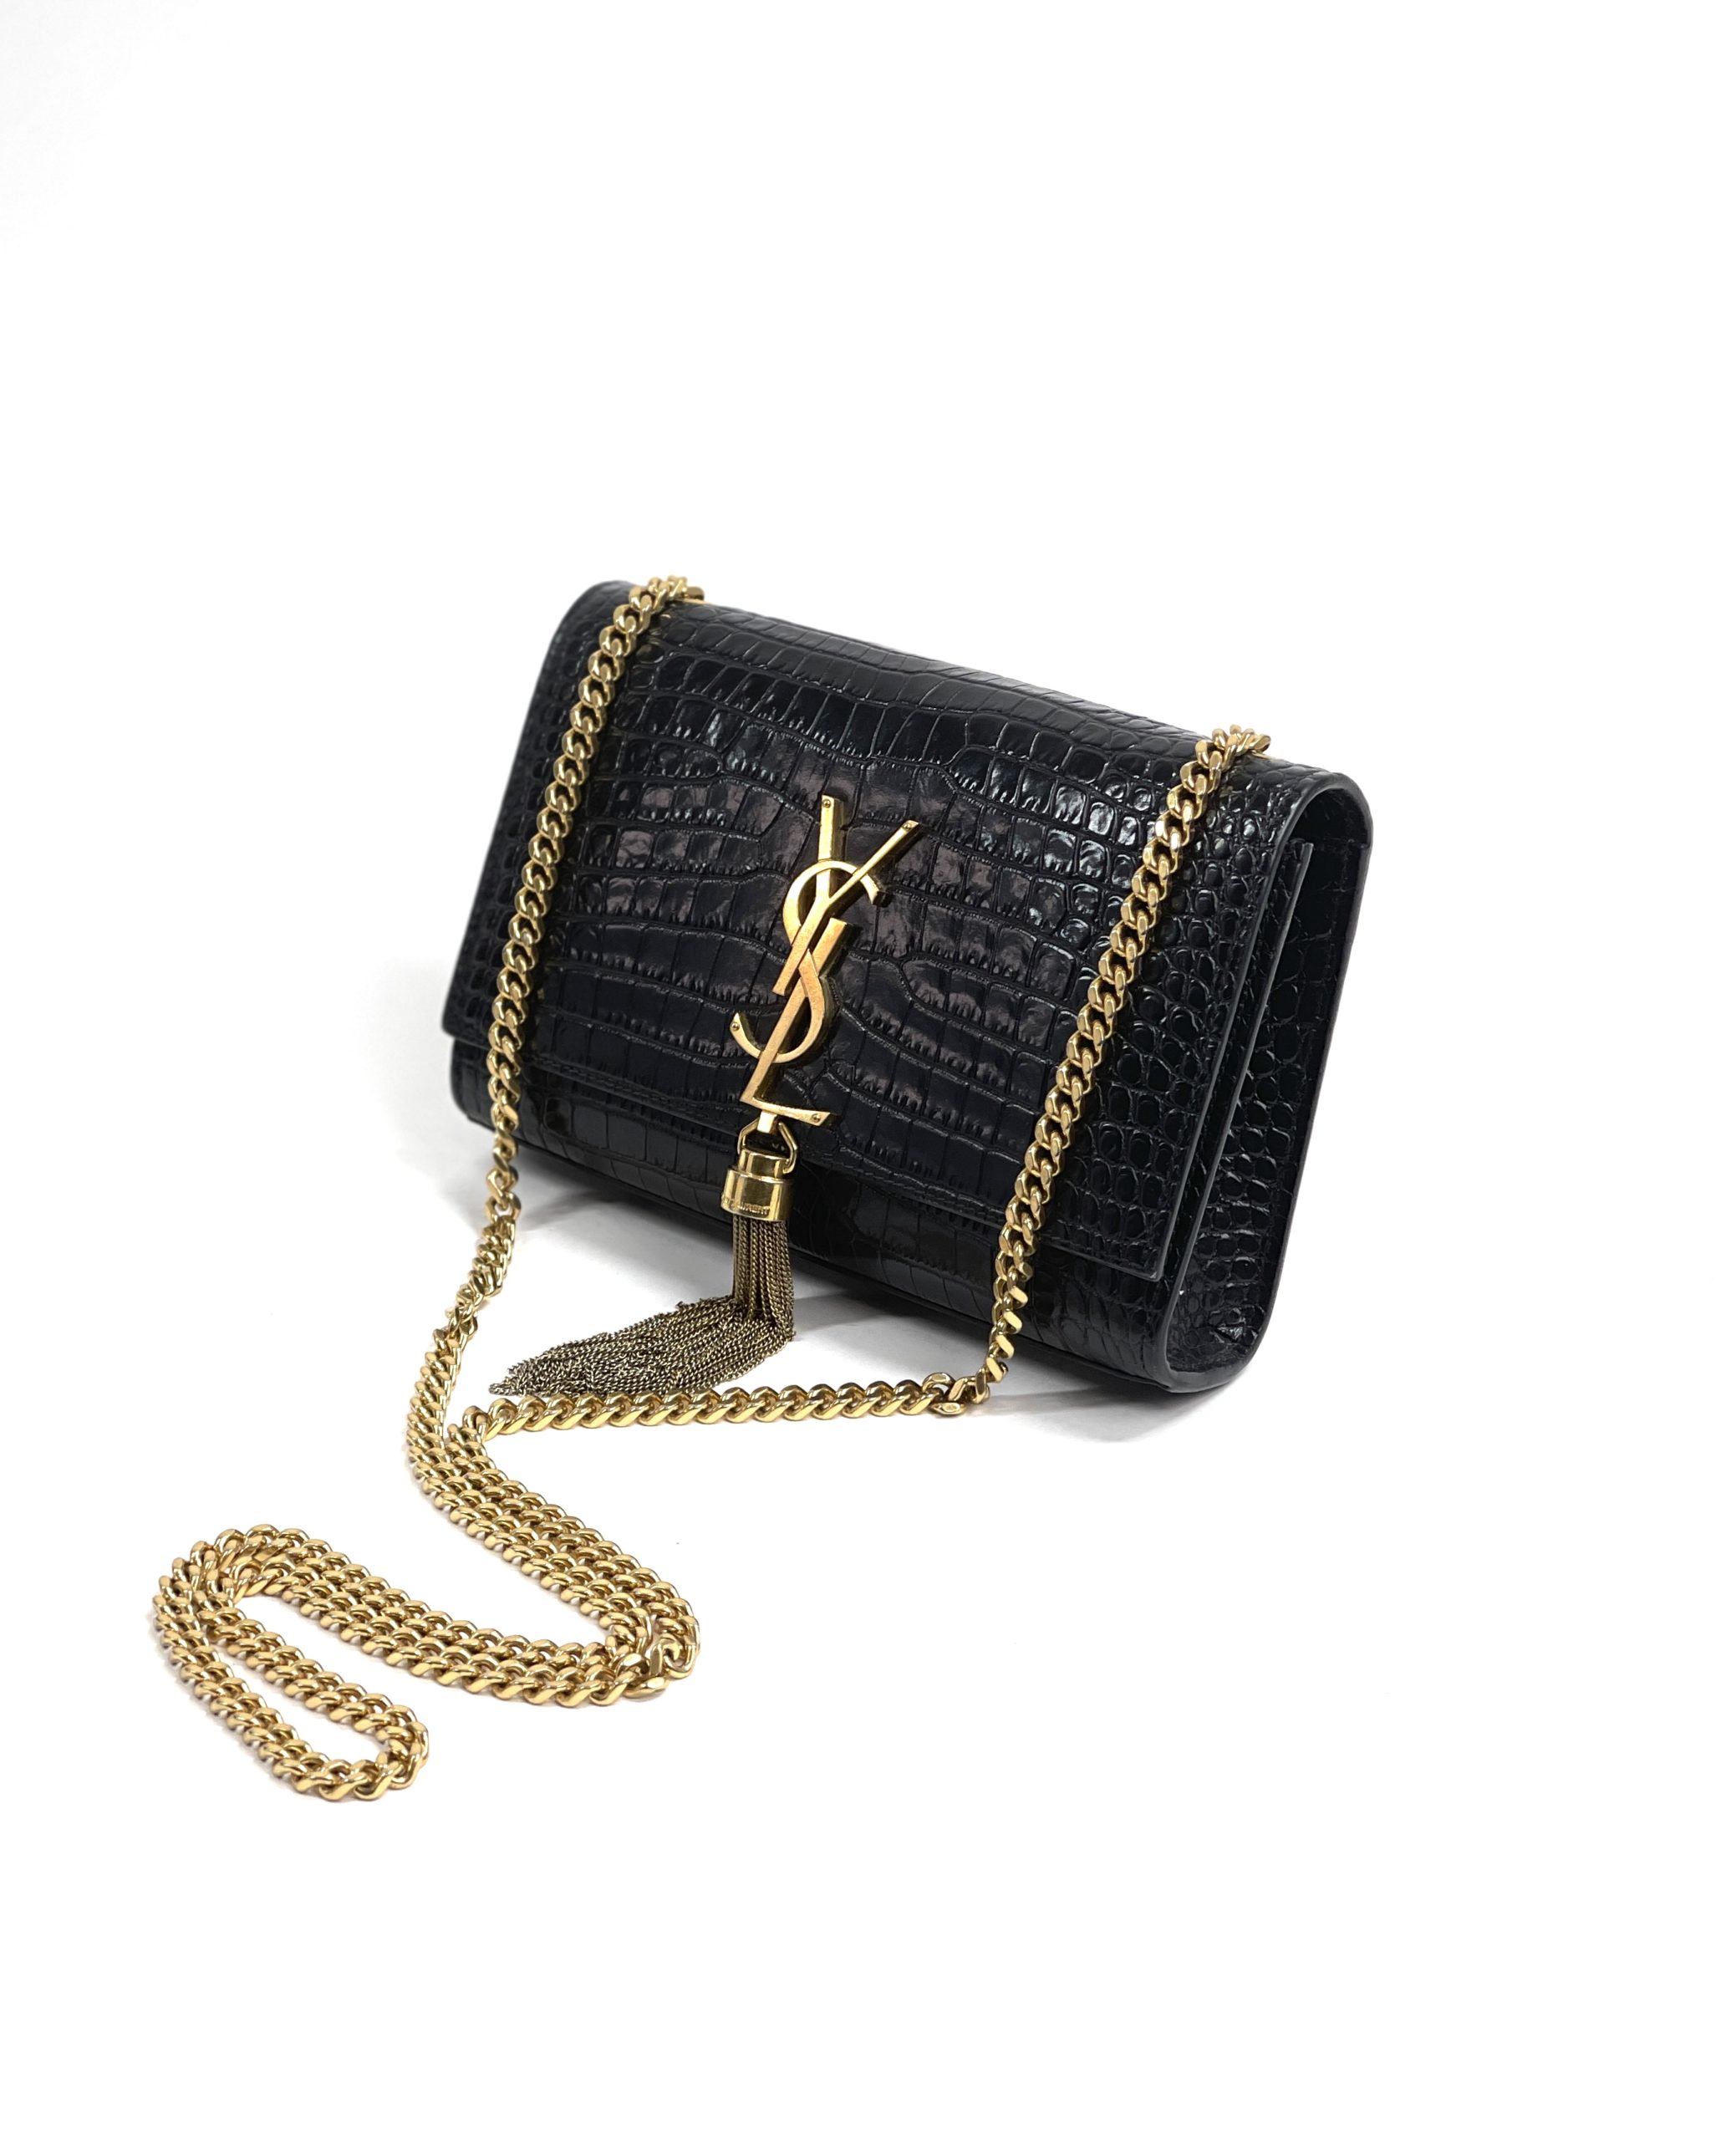 YSL saint laurent wallet on chain kate tassel bag review